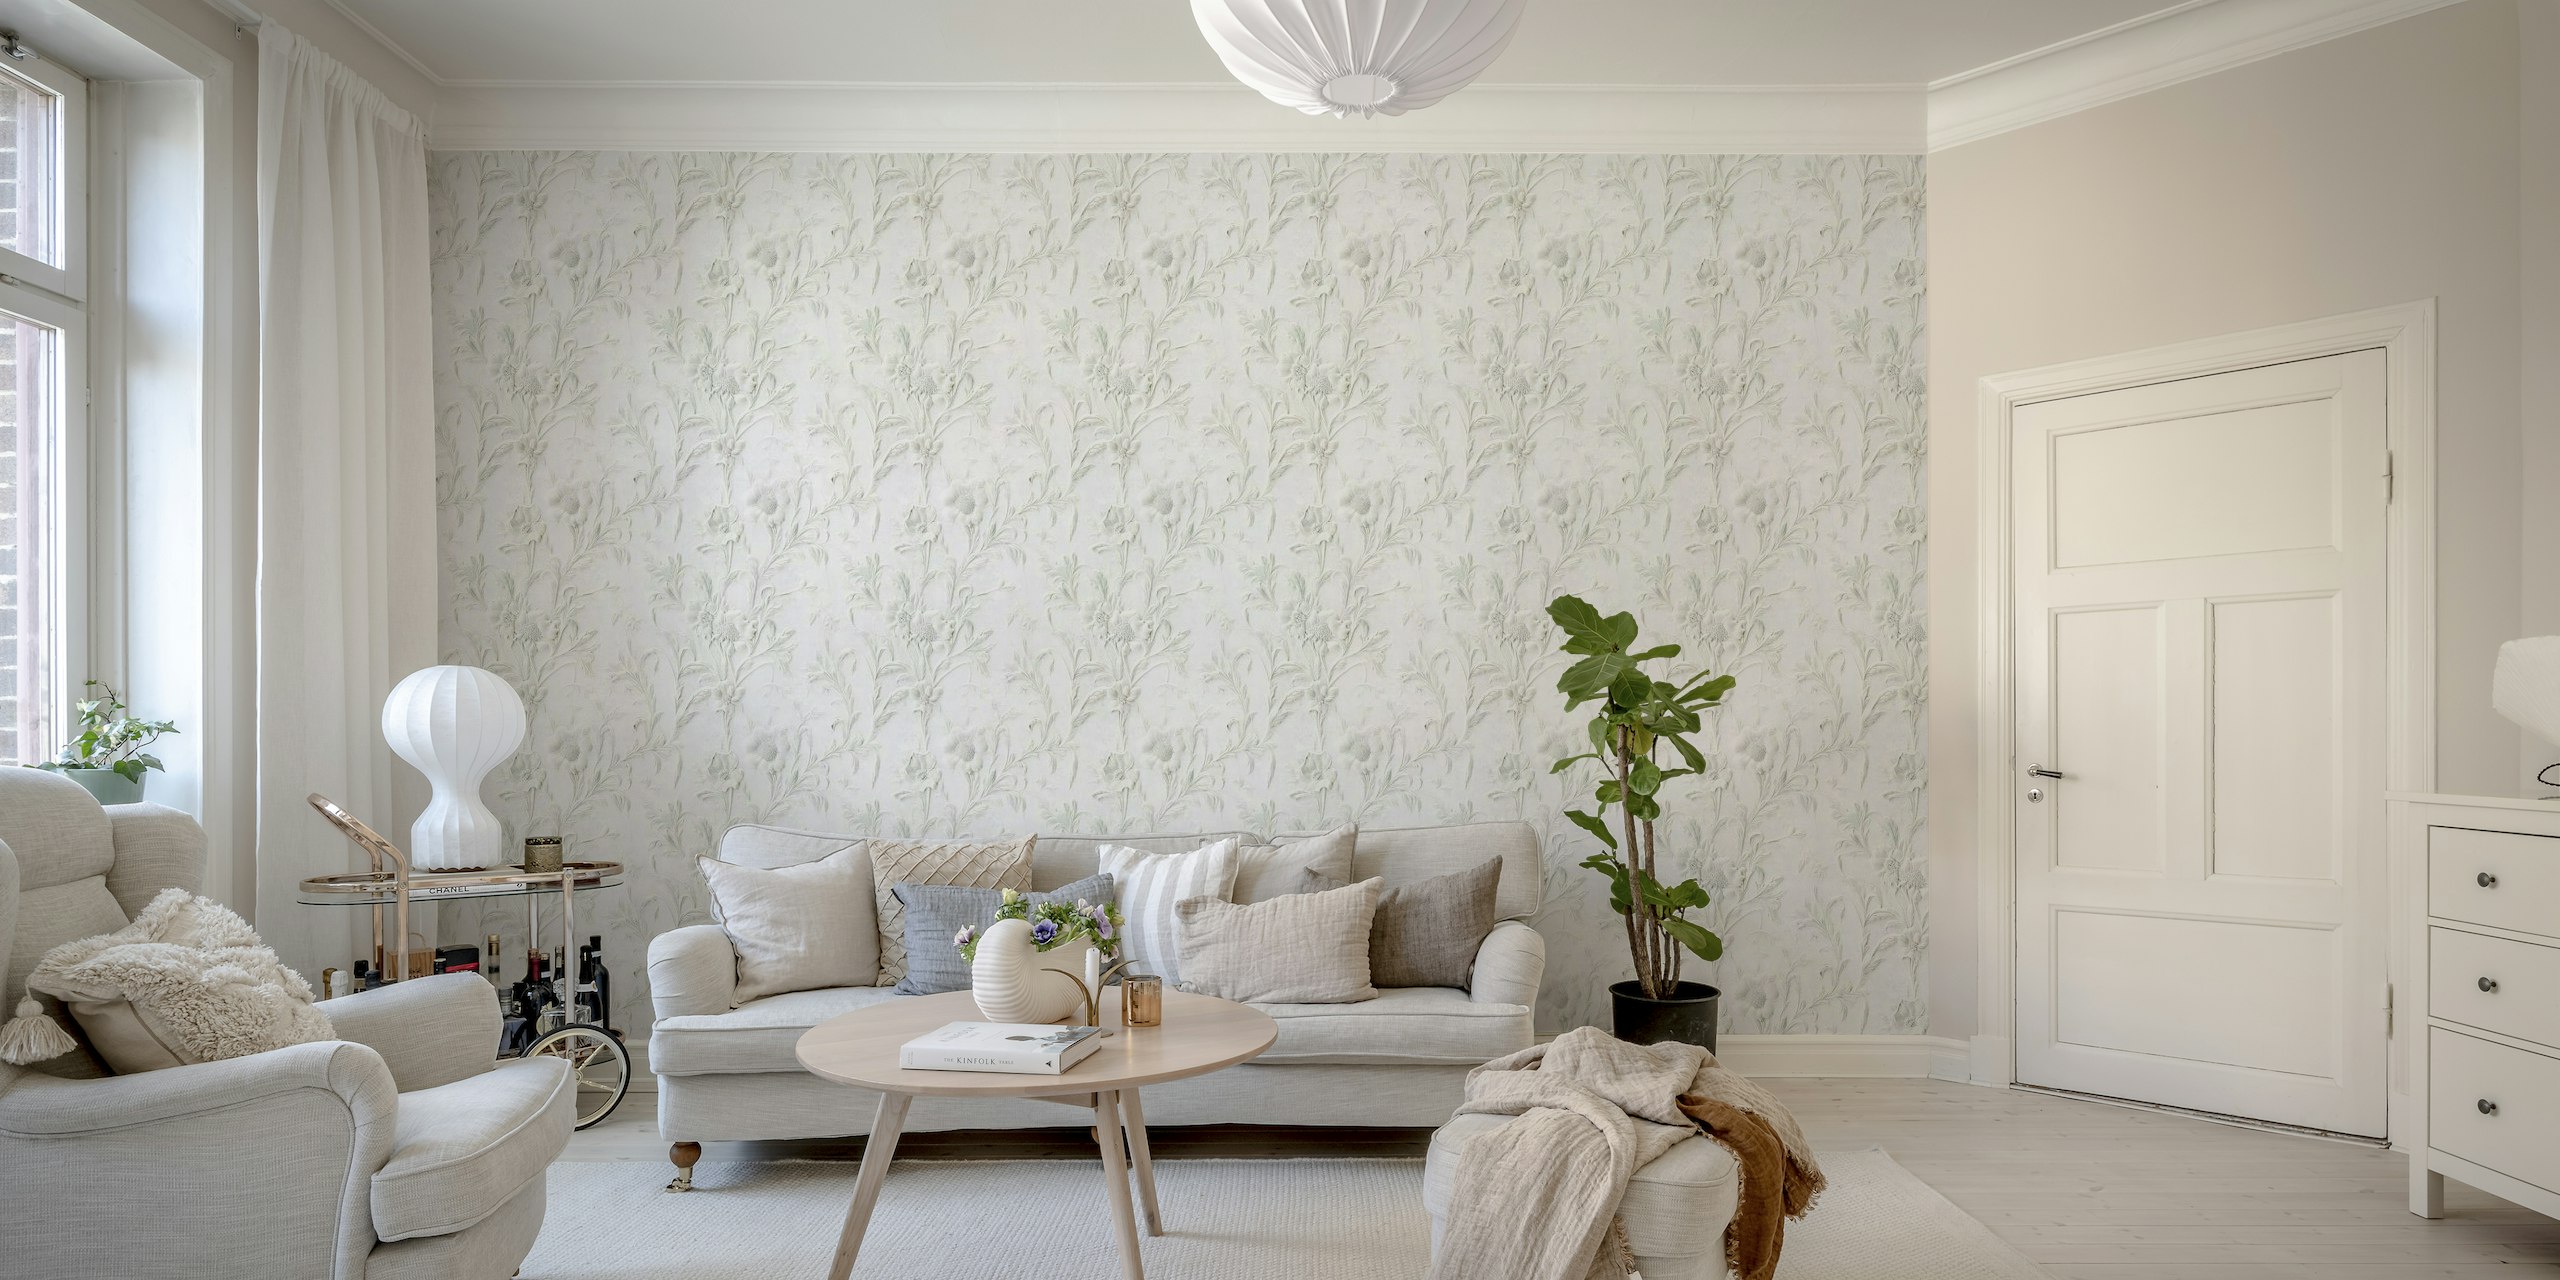 Elegant white floral pattern wall mural